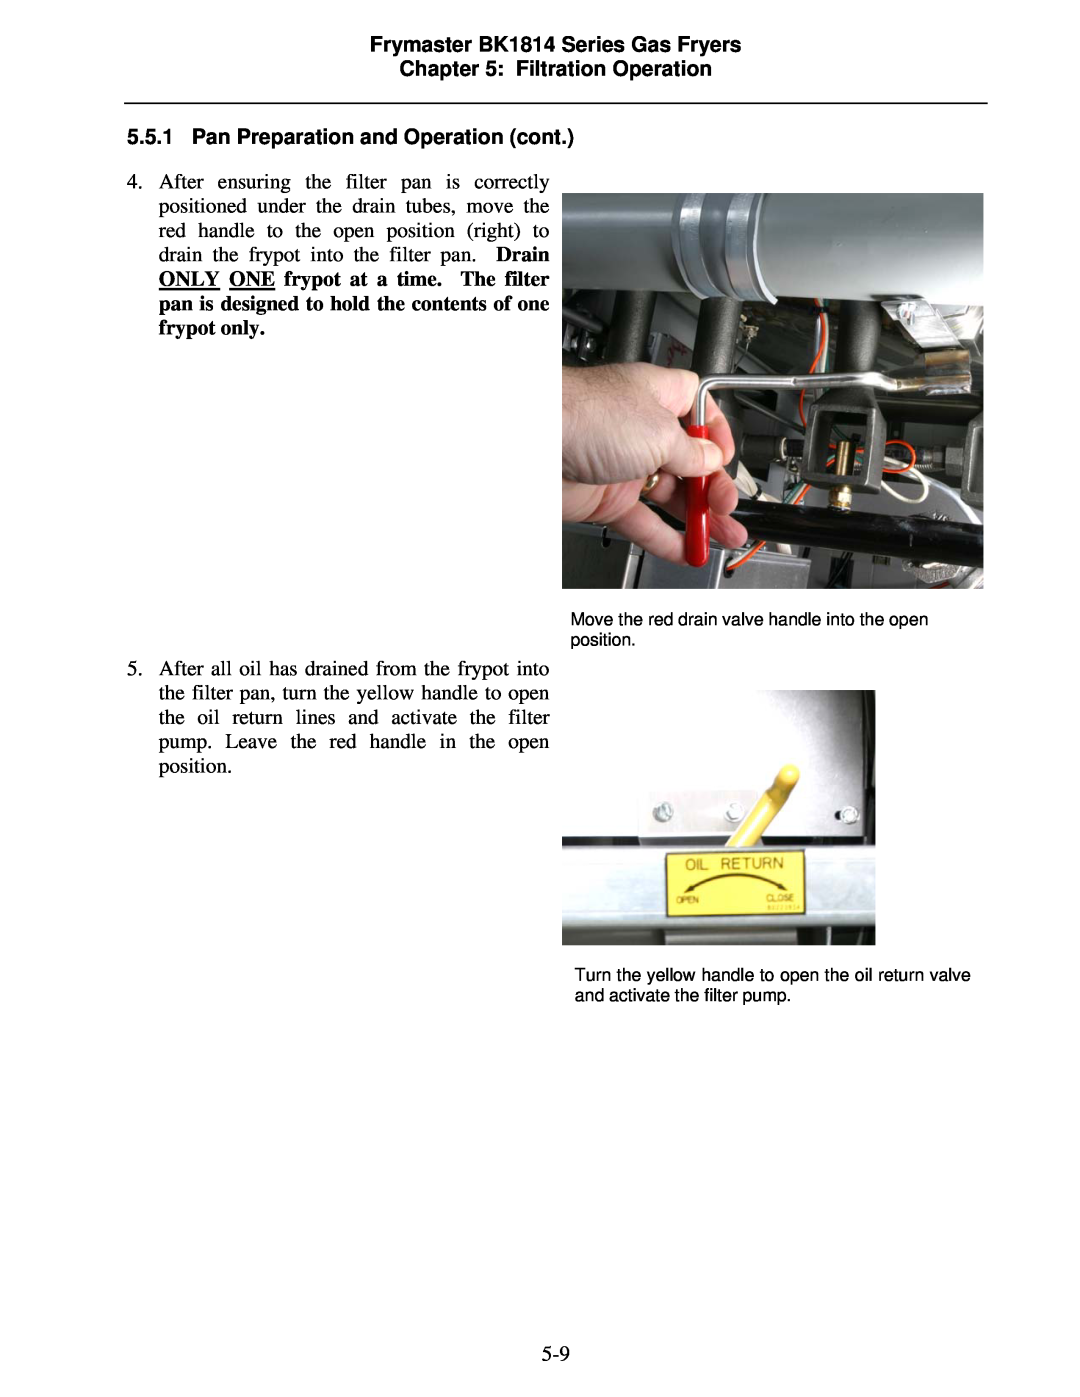 Frymaster BK1814 operation manual 